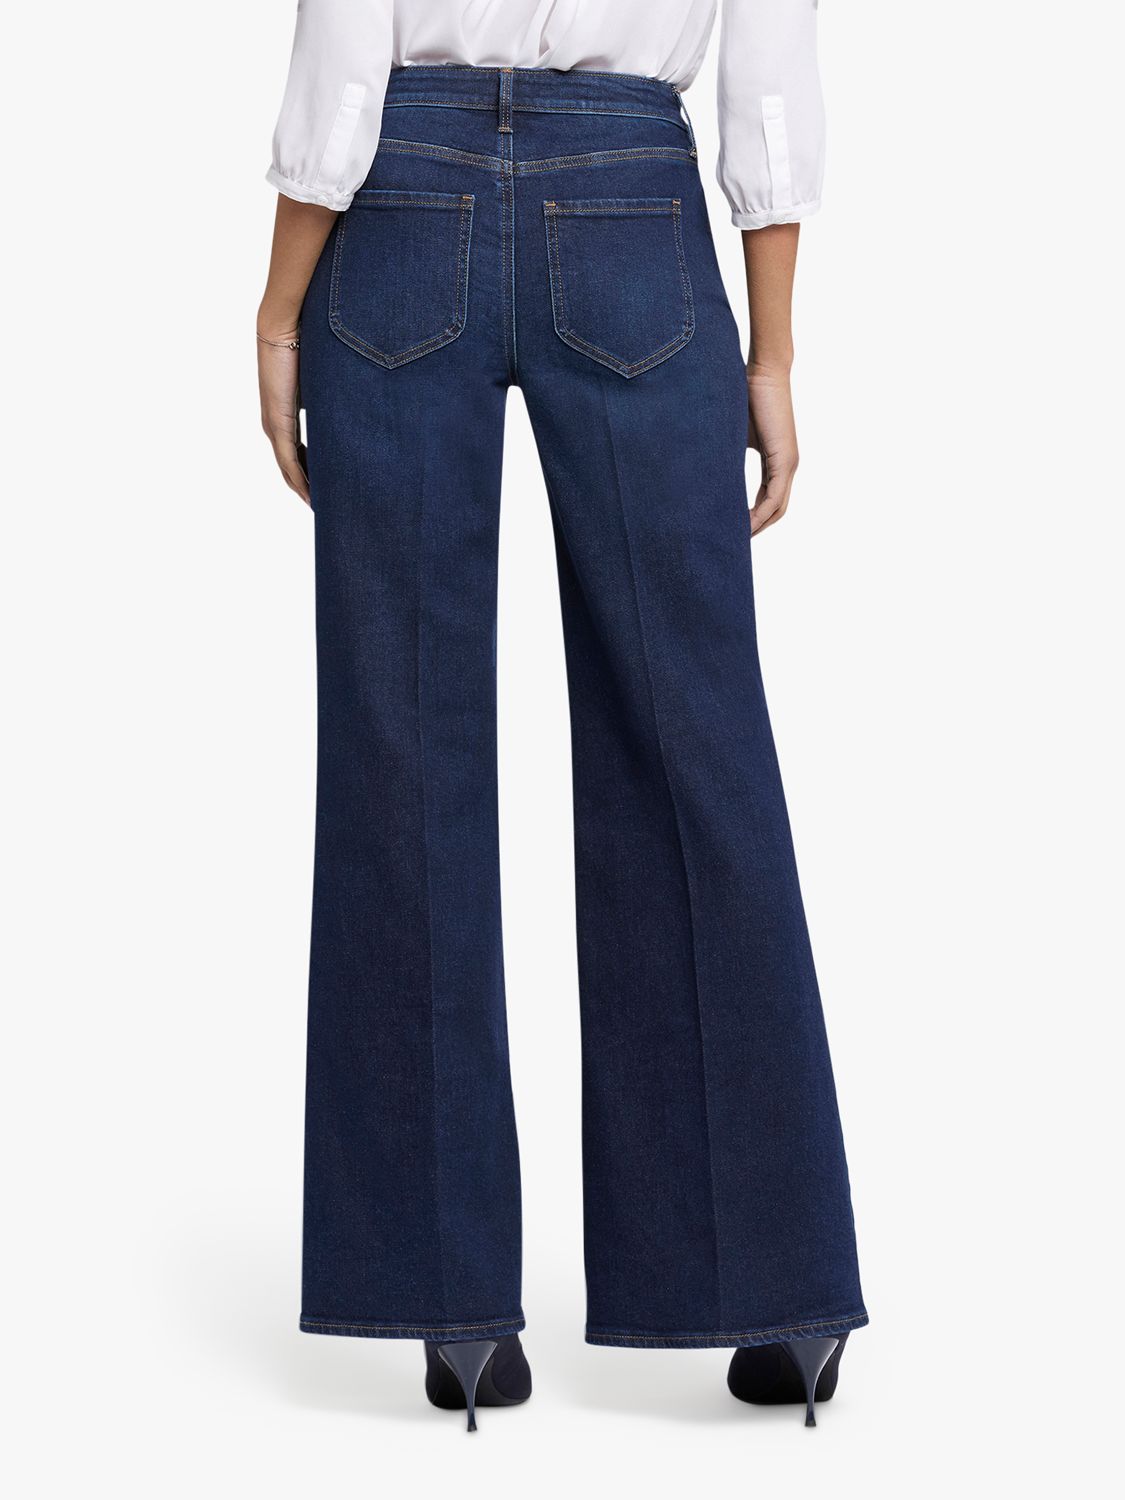 Buy NYDJ Mia Palazzo High Waist Jeans Online at johnlewis.com